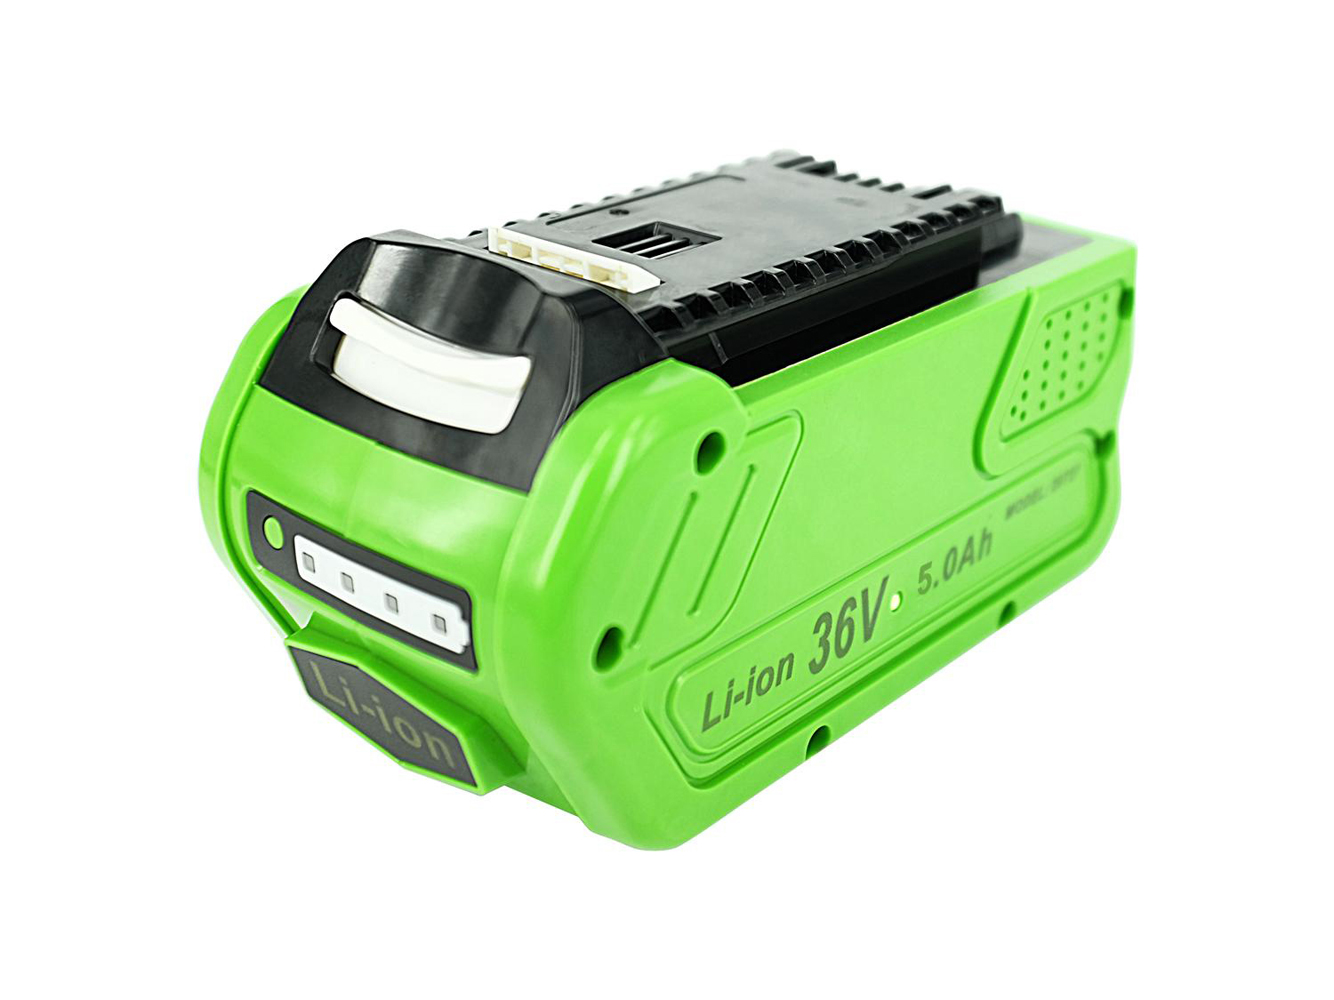 Remplacement compatible pour batterie d'outils Greenworks G40AB, G40AC, G40CS30, G40DT35, G40GC, G40HT.